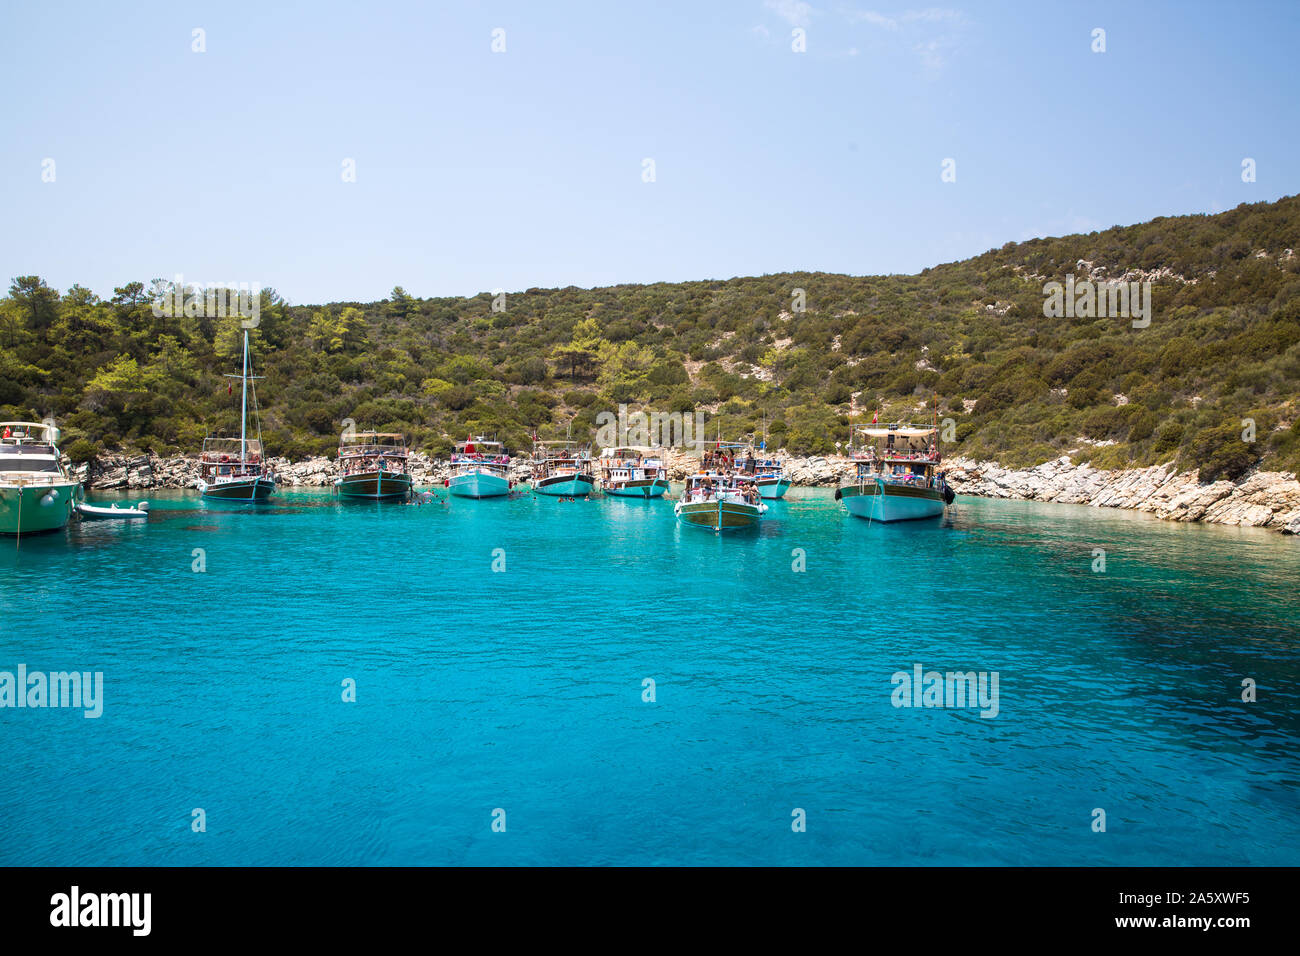 Touristical boats on the bay blue lagoon bay in Mediterranean sea near Turkey, Bodrum, Mugla. Stock Photo